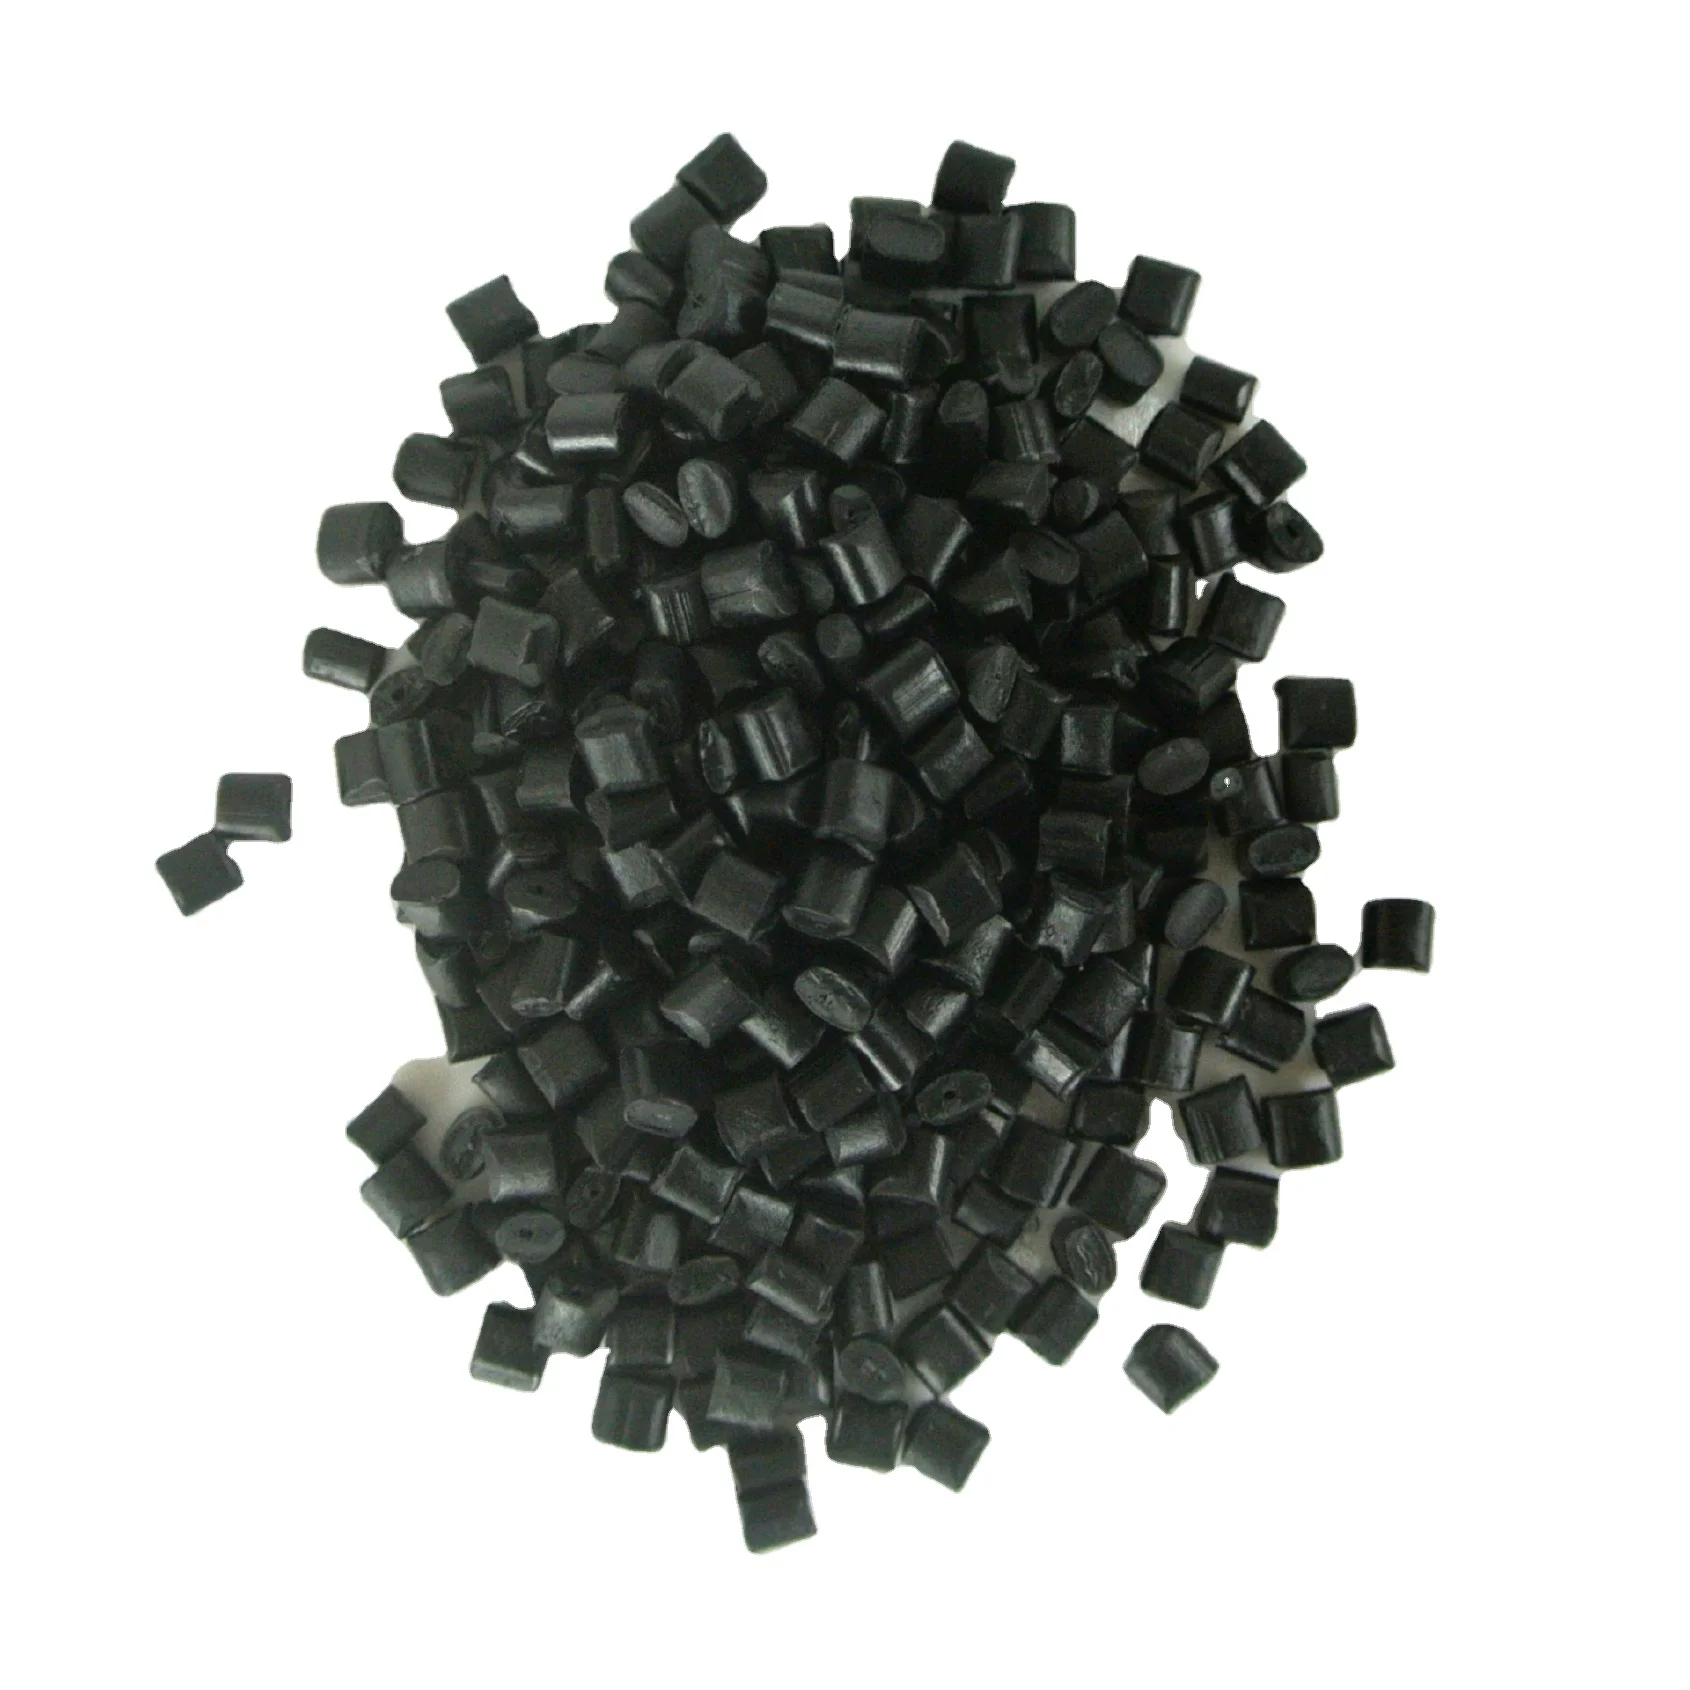 Extrusion pipe grade Virgin HDPE PE100 black color granule hdpe pe 100 resin cheap price